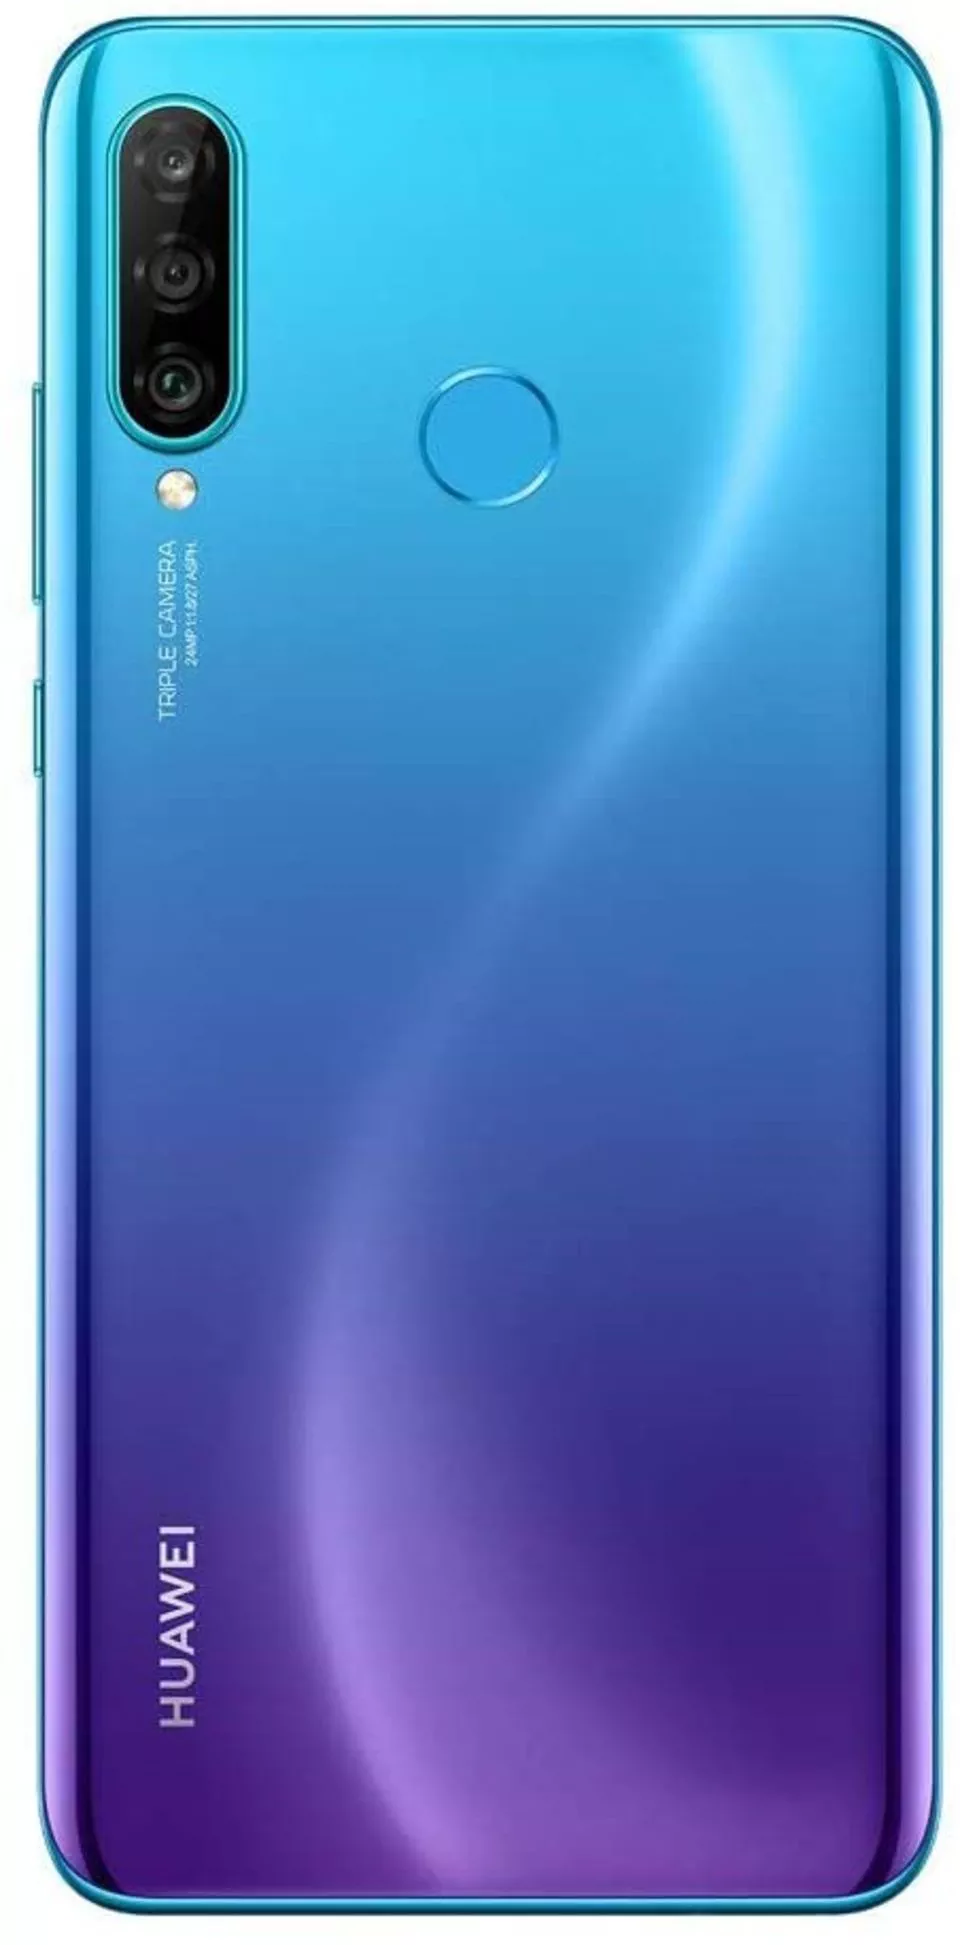 Huawei P30 Lite - Phone Review